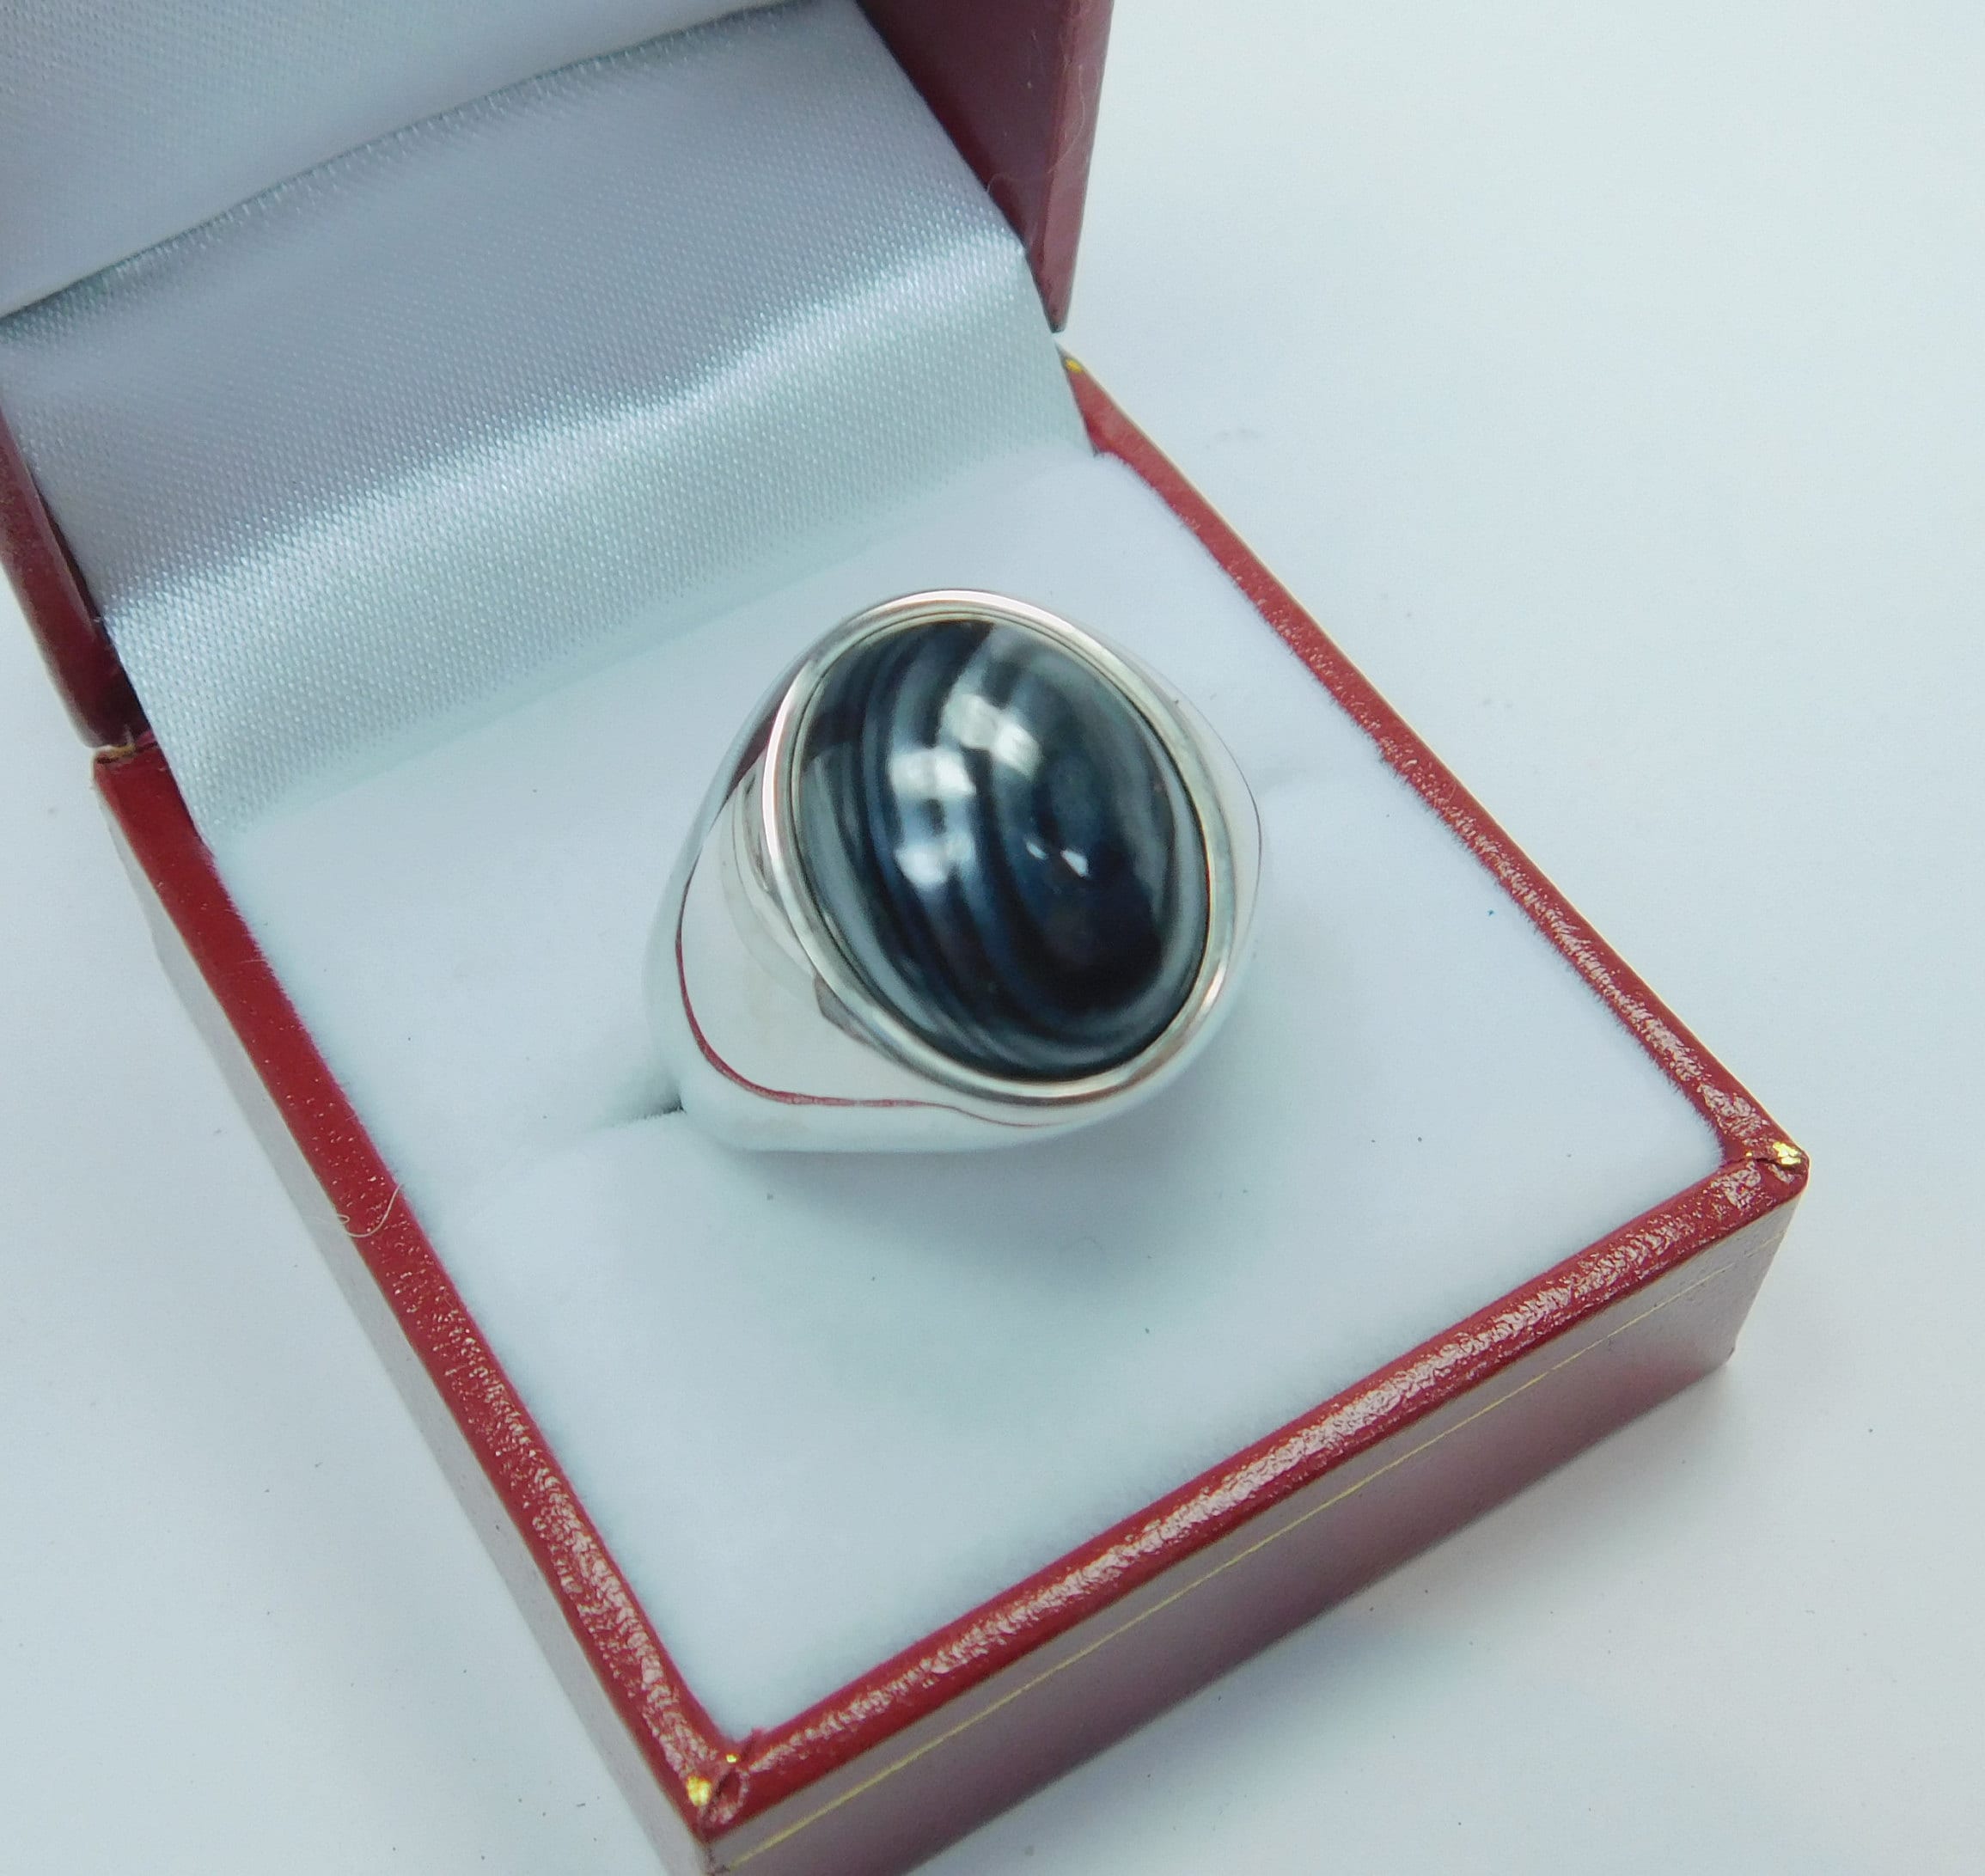 MagnetRX Magnetic Ring Women - Elegant Crystal Ring - Magnet Rings Women (Gold | Ring Size: 6)